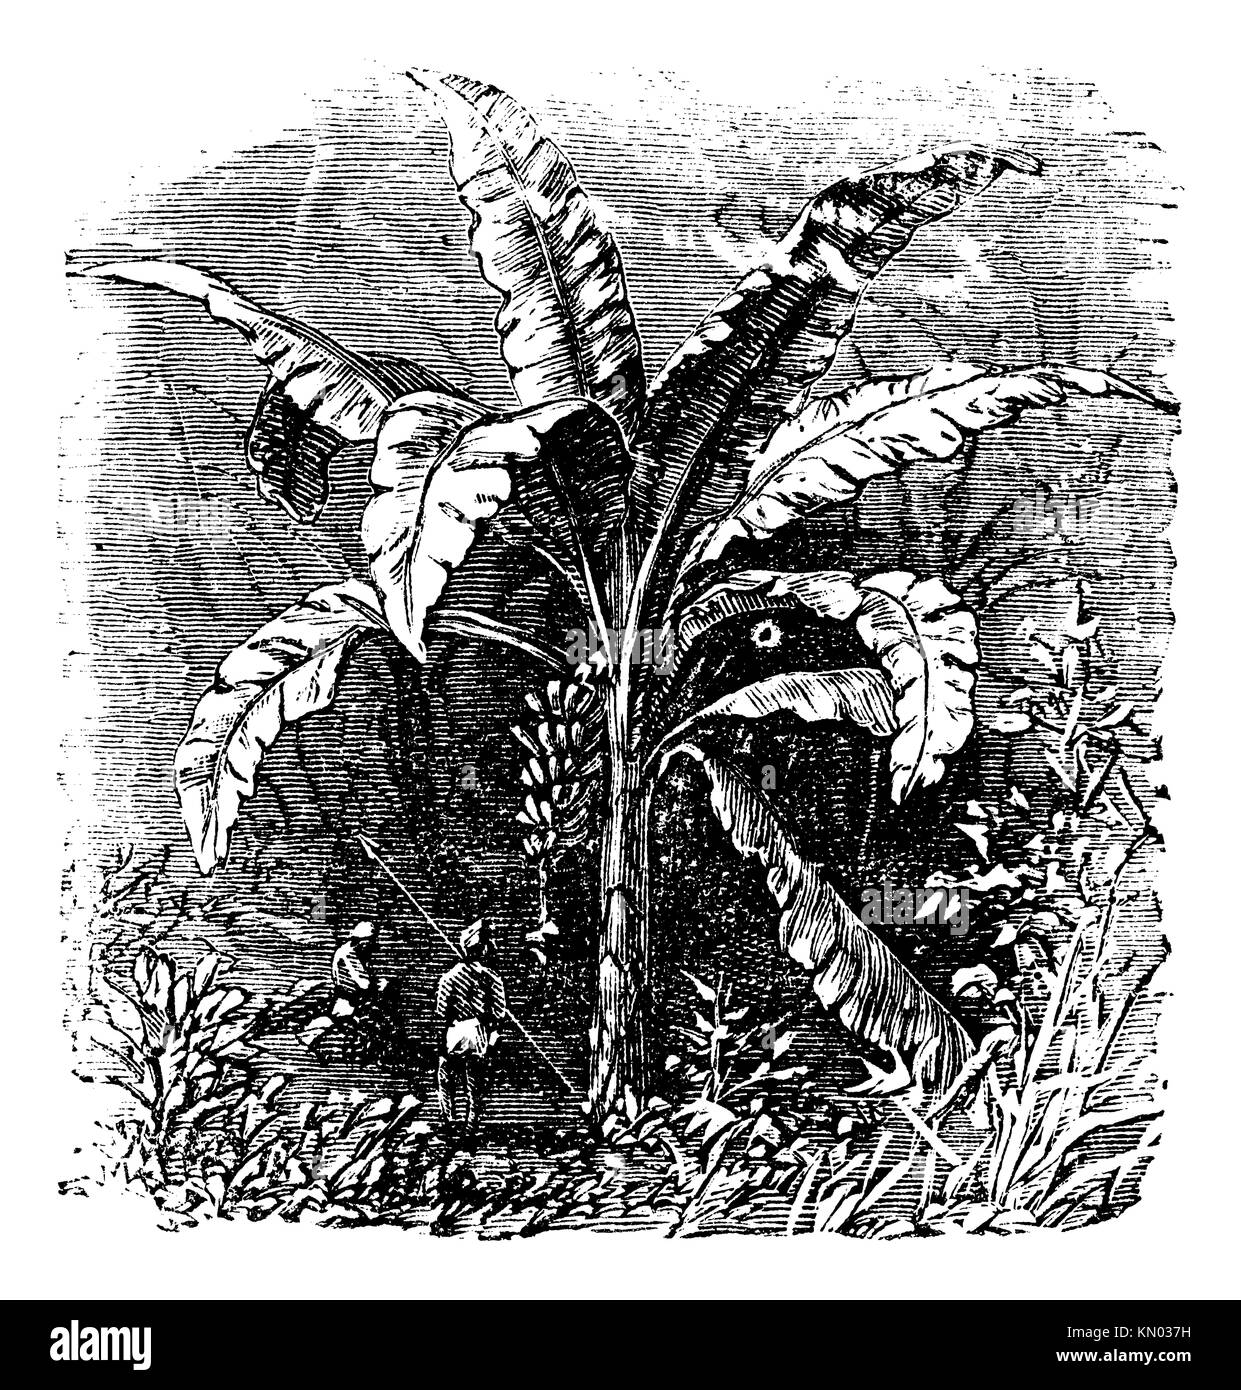 Banana tree or Musa acuminata, Musa balbisiana , vintage engraving  Old engraved illustration of a Banana plant showing fruit and inflorescence Stock Photo